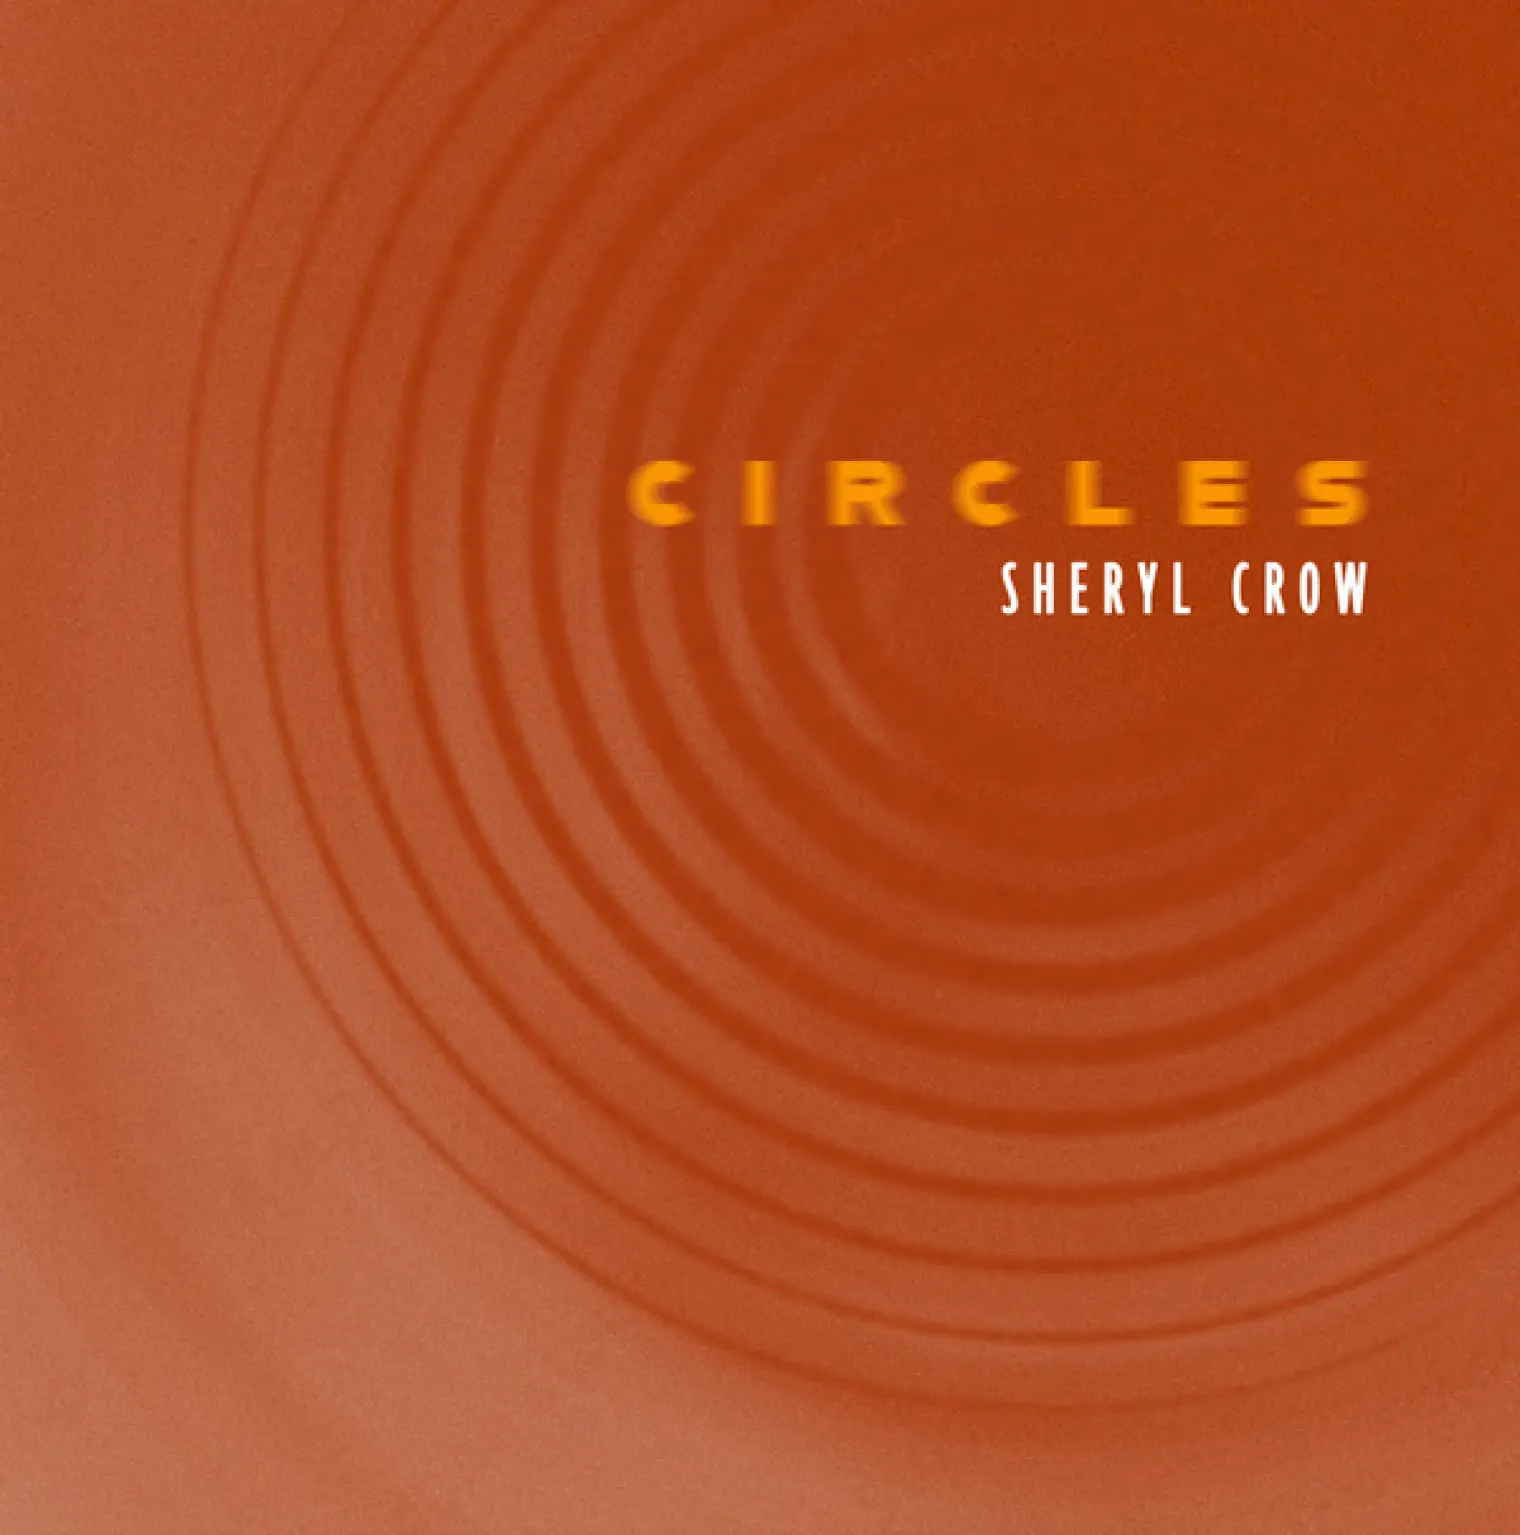 Circles -  Sheryl Crow 